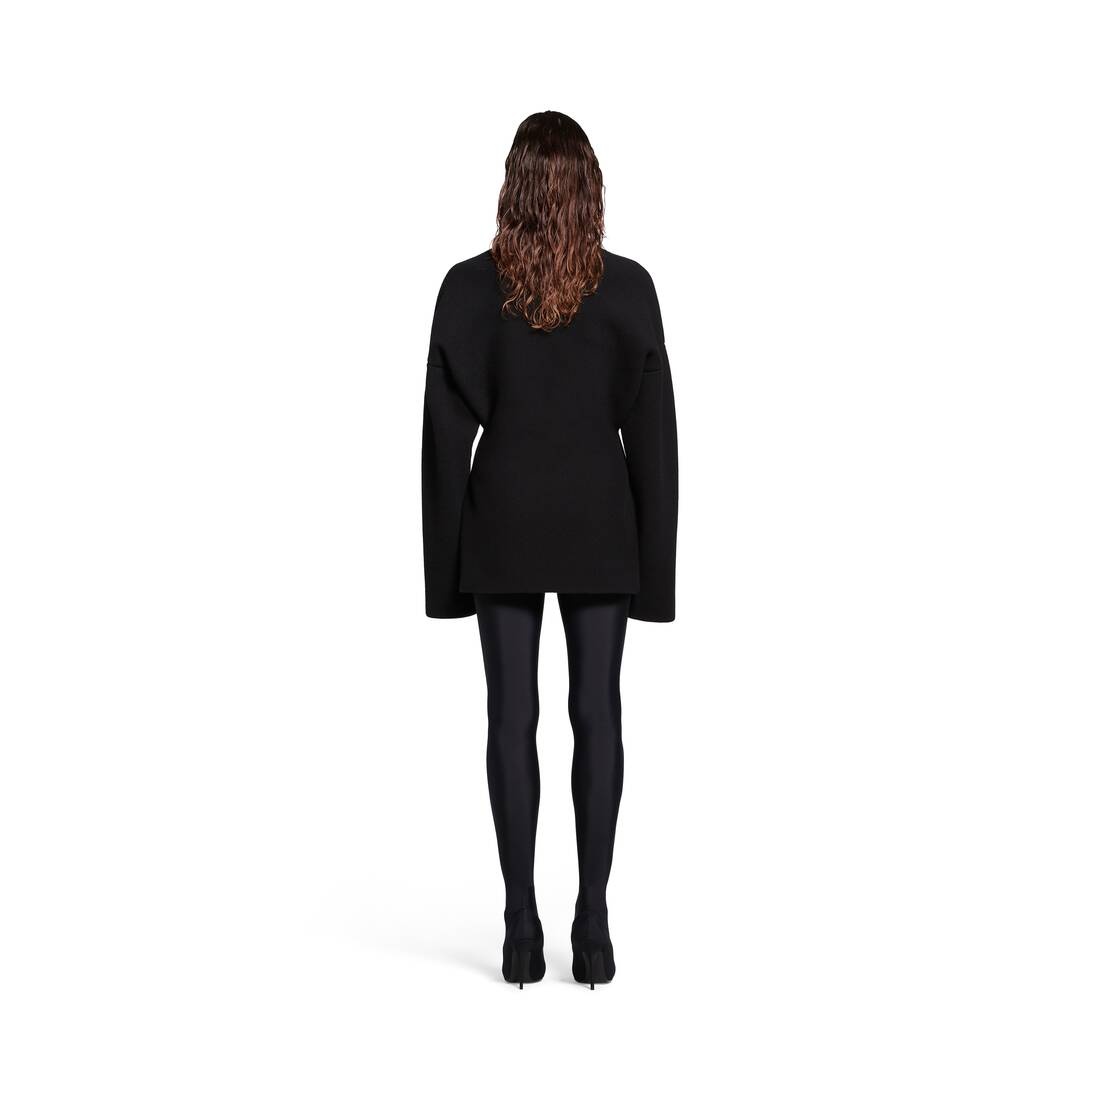 Women's Hourglass Turtleneck Sweater in Black - 4